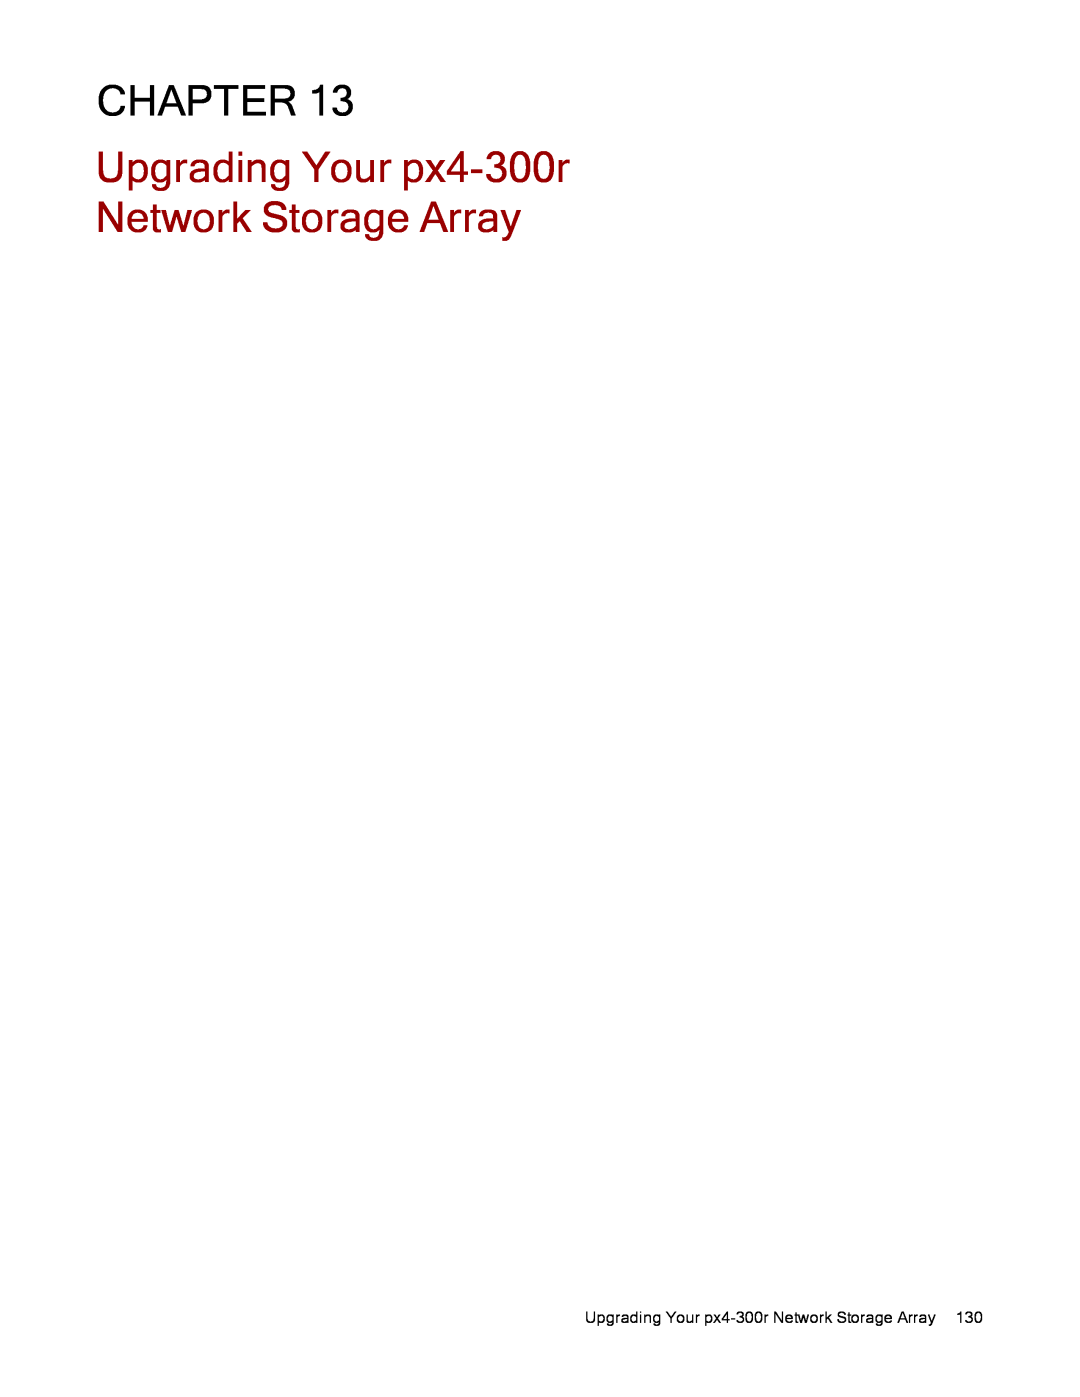 Lenovo 70BJ9007WW, 70BJ9005WW manual Upgrading Your px4-300rNetwork Storage Array, Chapter 